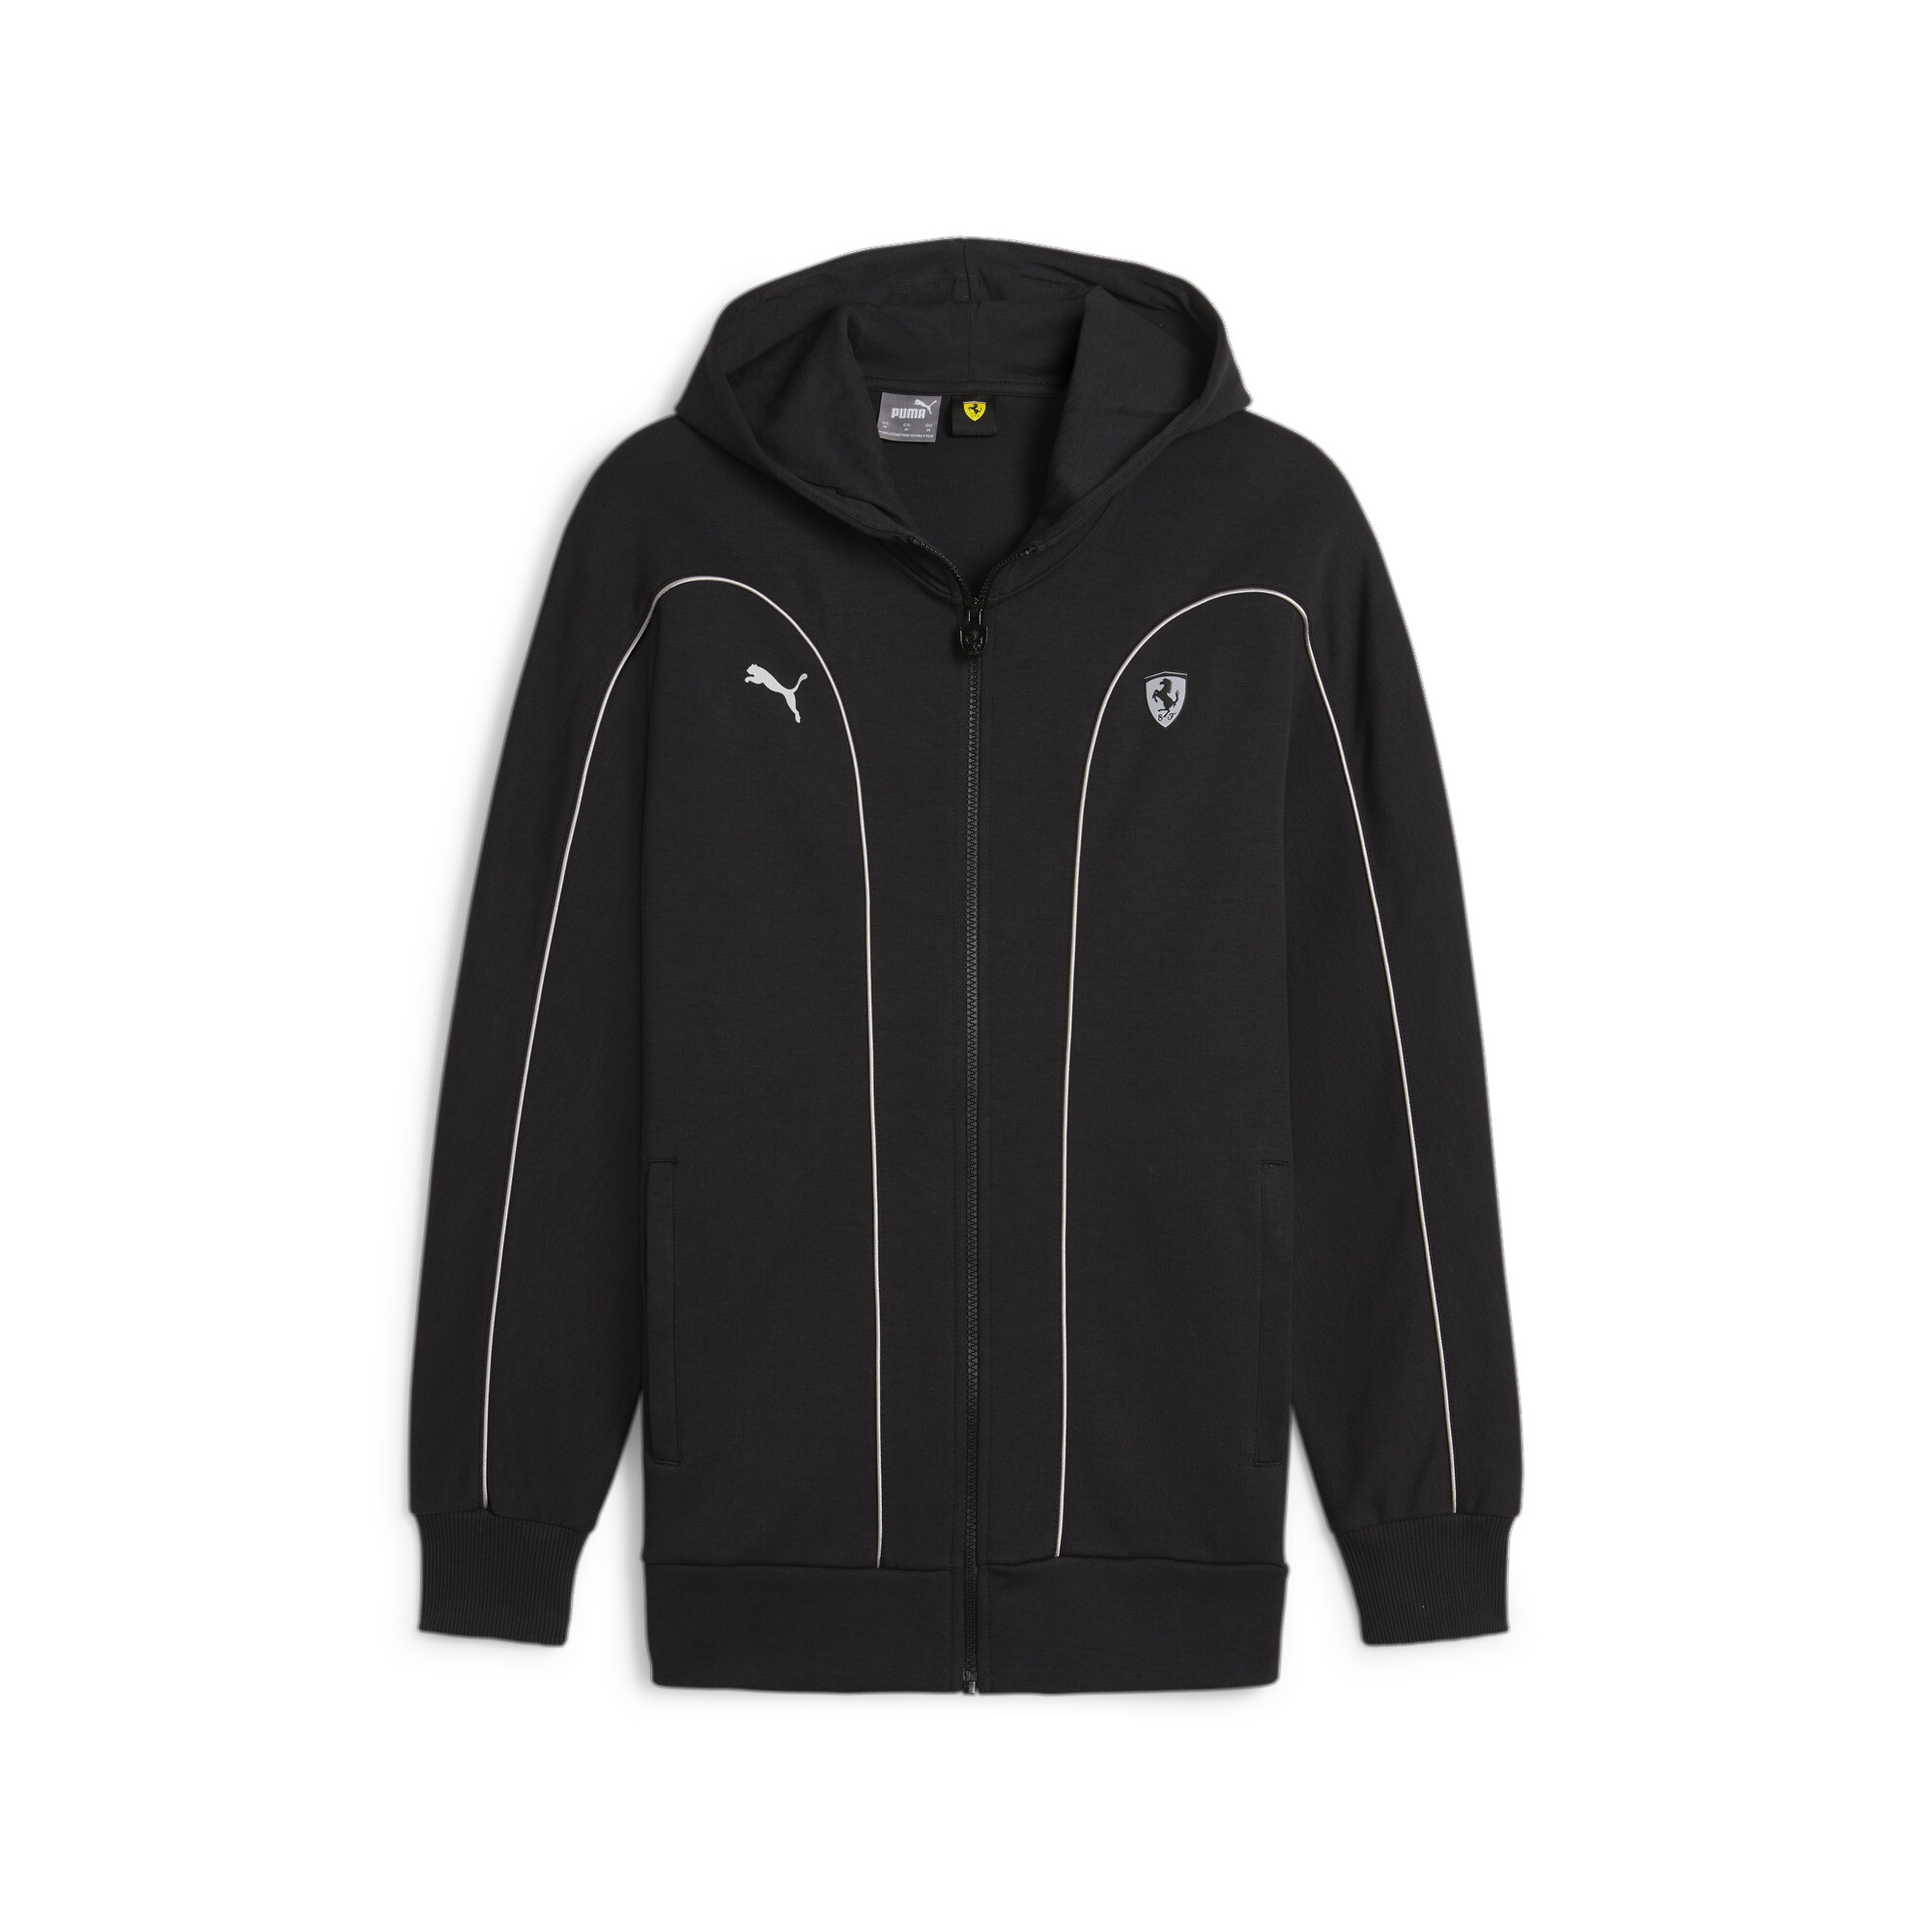 Men's Puma Scuderia Ferrari Style's Motorsport Hooded Jacket, Black, Size L, Sport